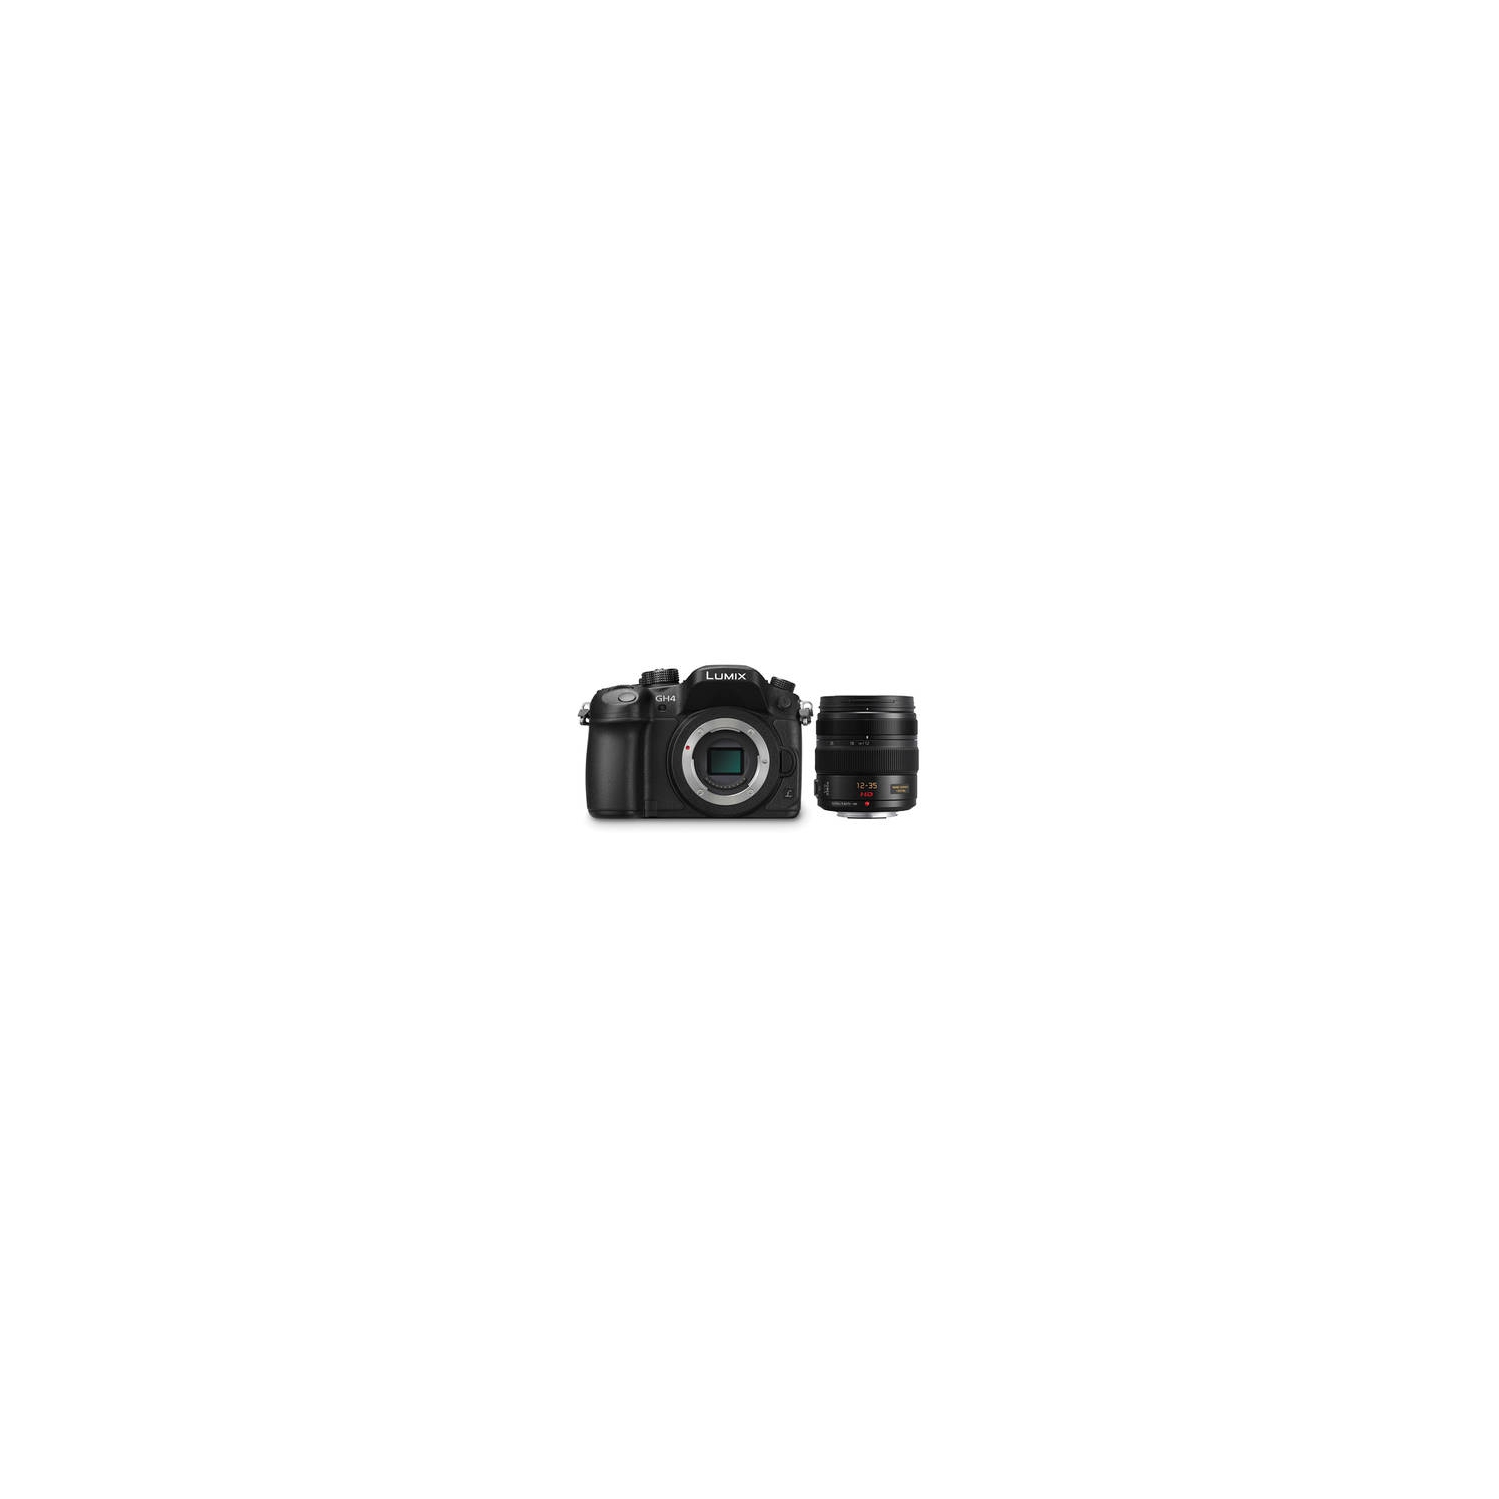 Panasonic Lumix DMC-GH4 4K Mirrorless Micro Four Thirds Digital Camera Kit with 12-35mm f/2.8 ASPH. Lens - US Version w/ Seller Warranty